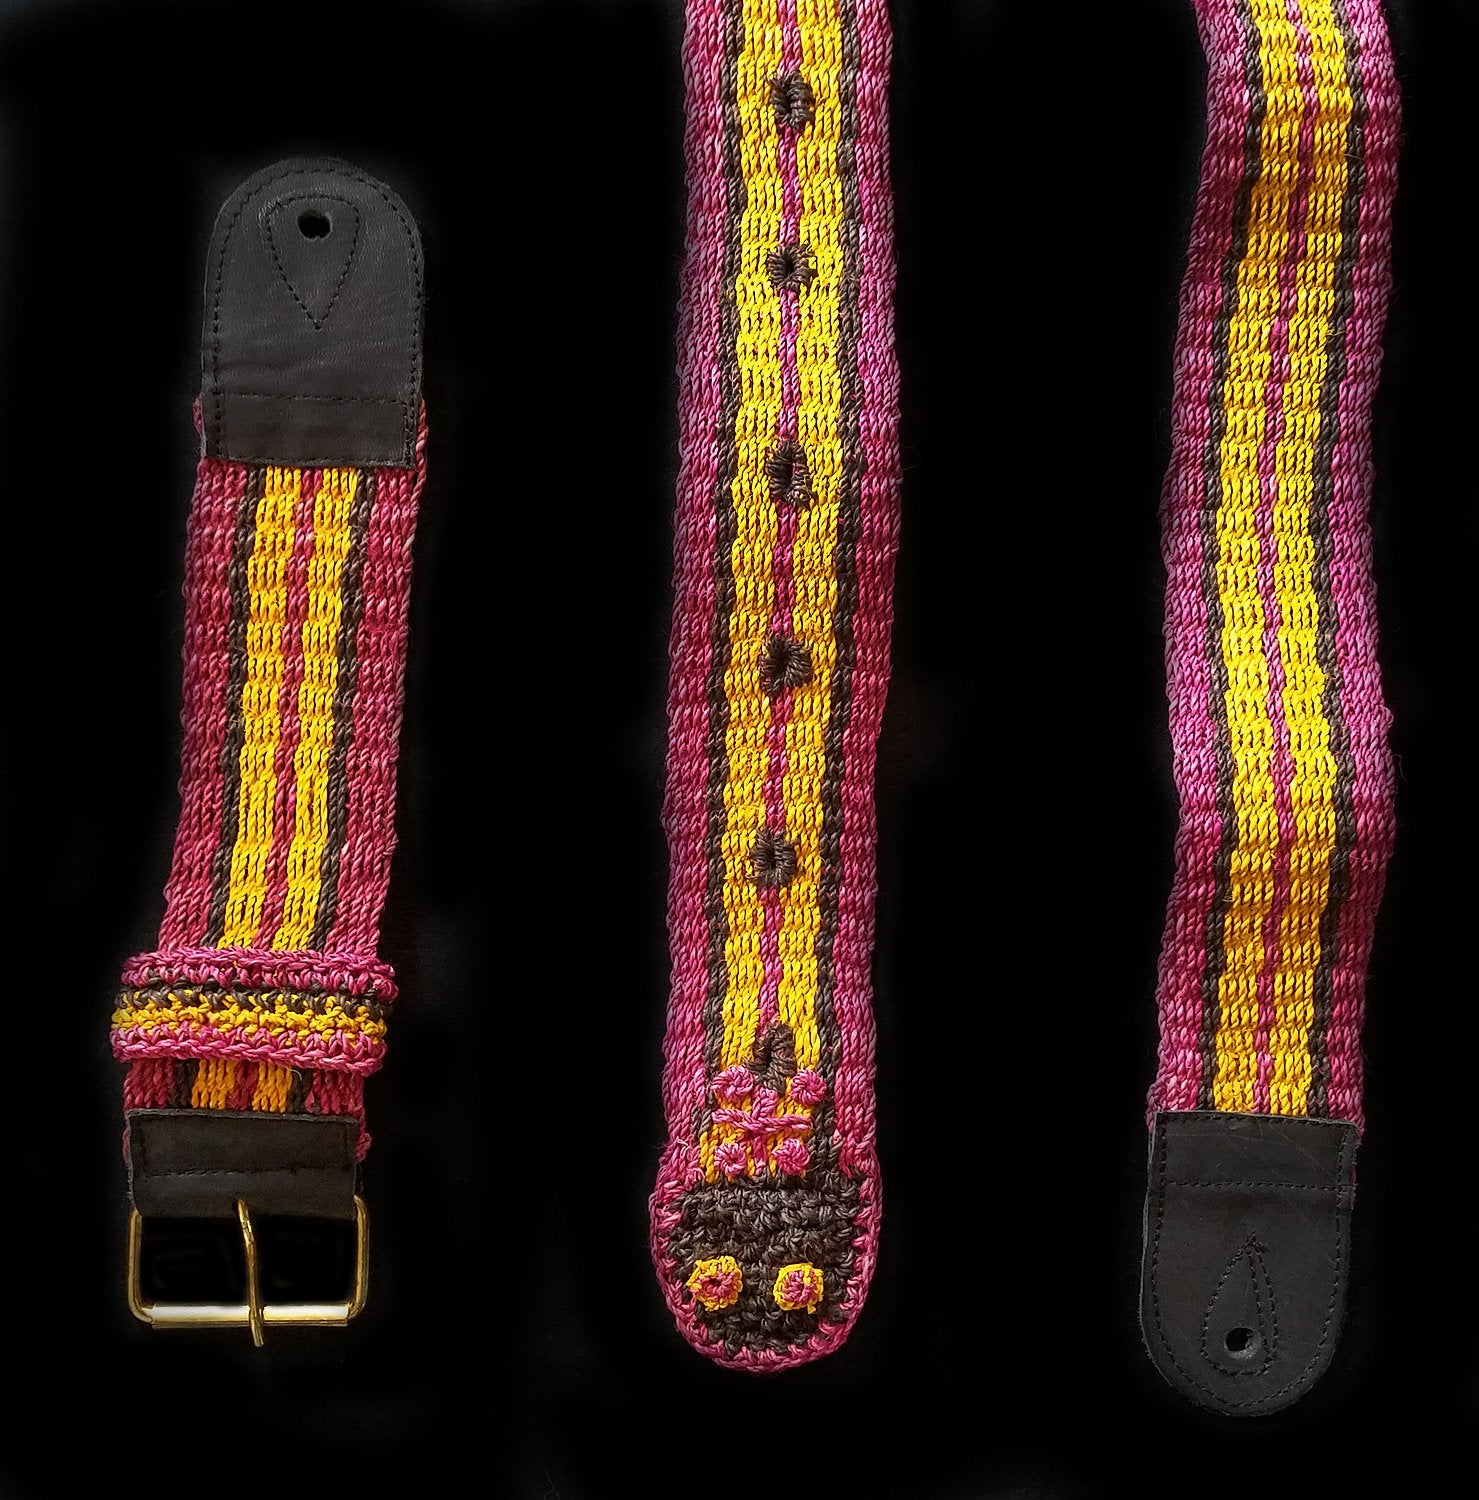 Fair-trade guitar strap hand-made by Peruvian  artisan -   Ecology